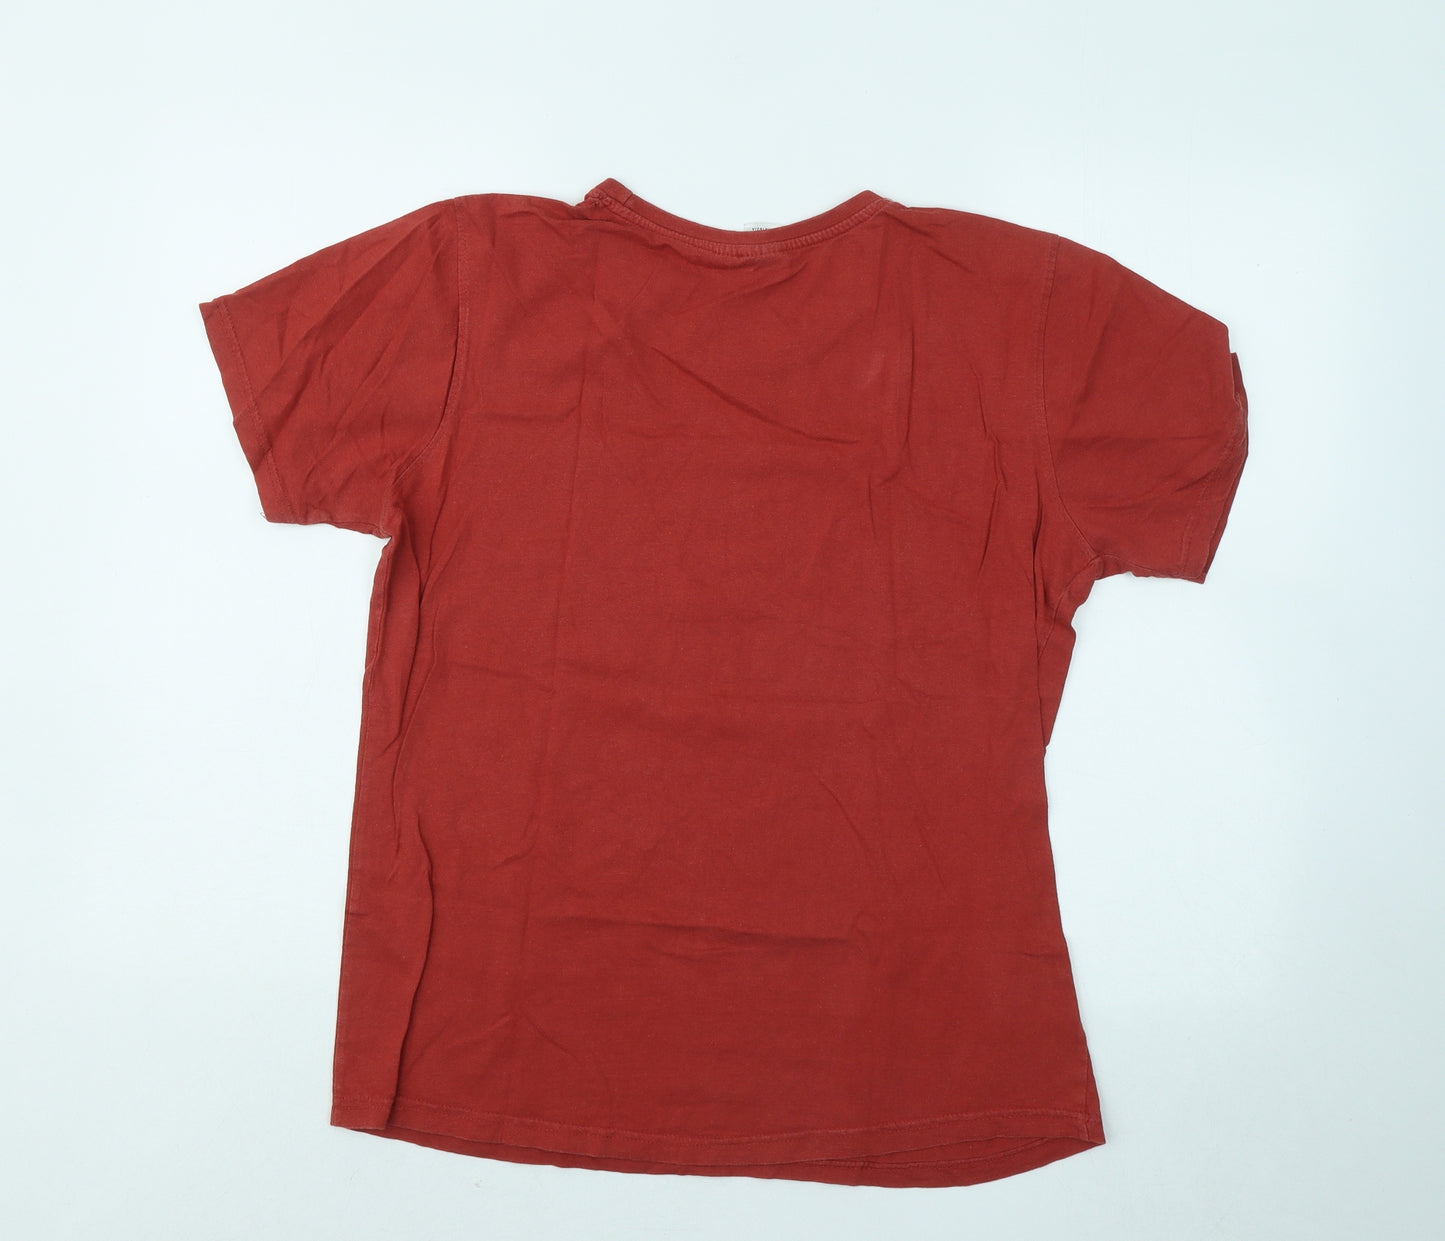 Plus Fit Mens Red Cotton T-Shirt Size L Round Neck - Let's Move On